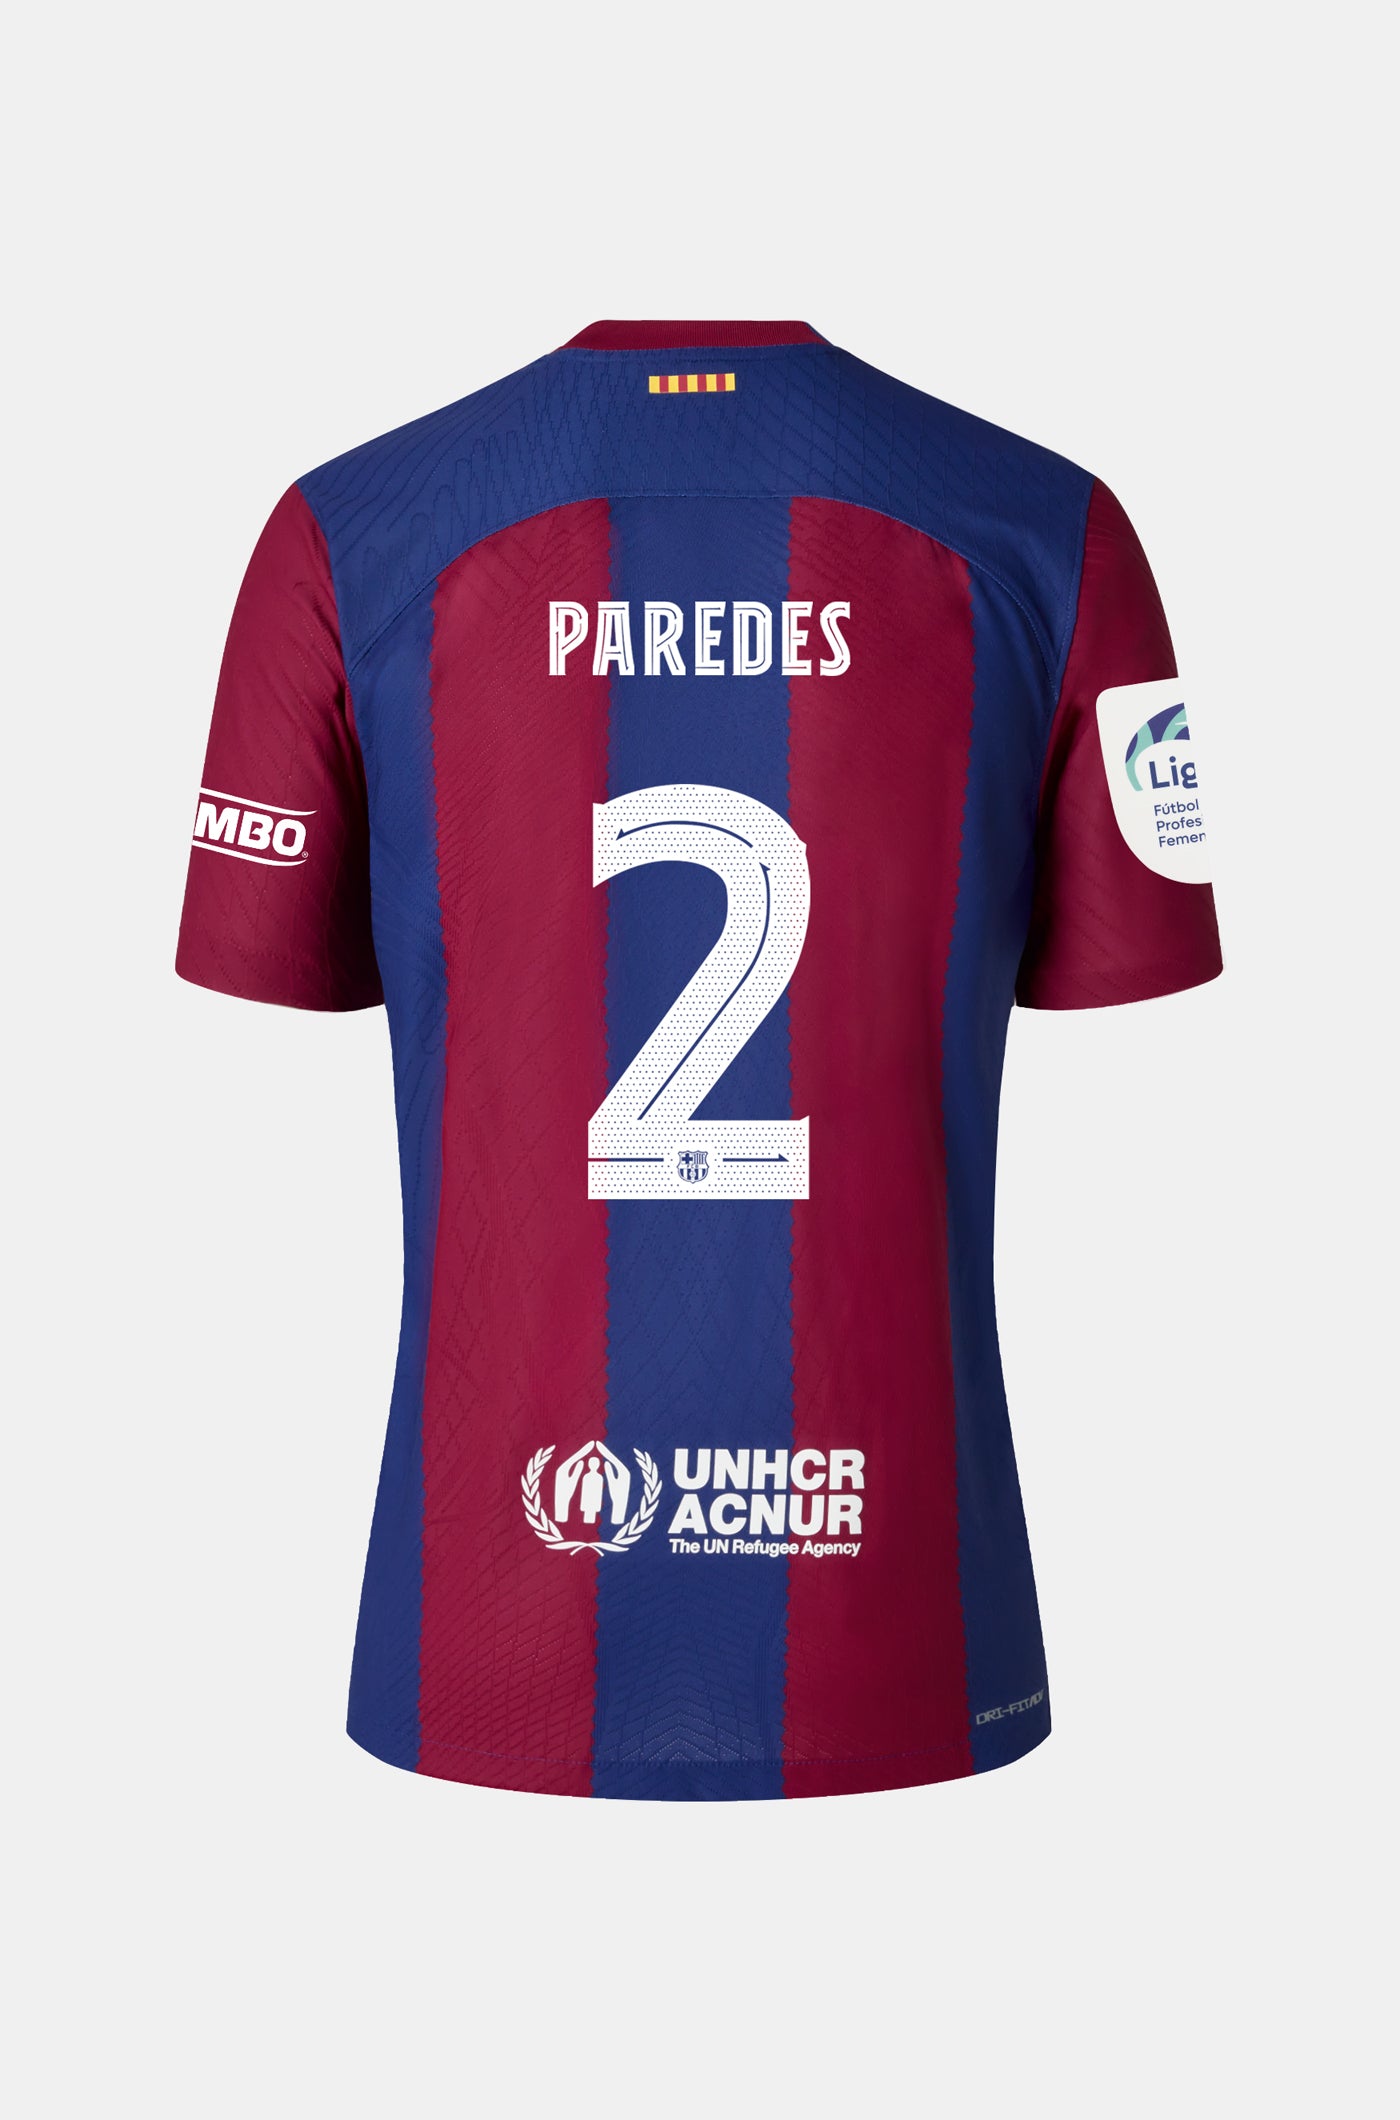 Liga F FC Barcelona home shirt 23/24 Player's Edition - PAREDES